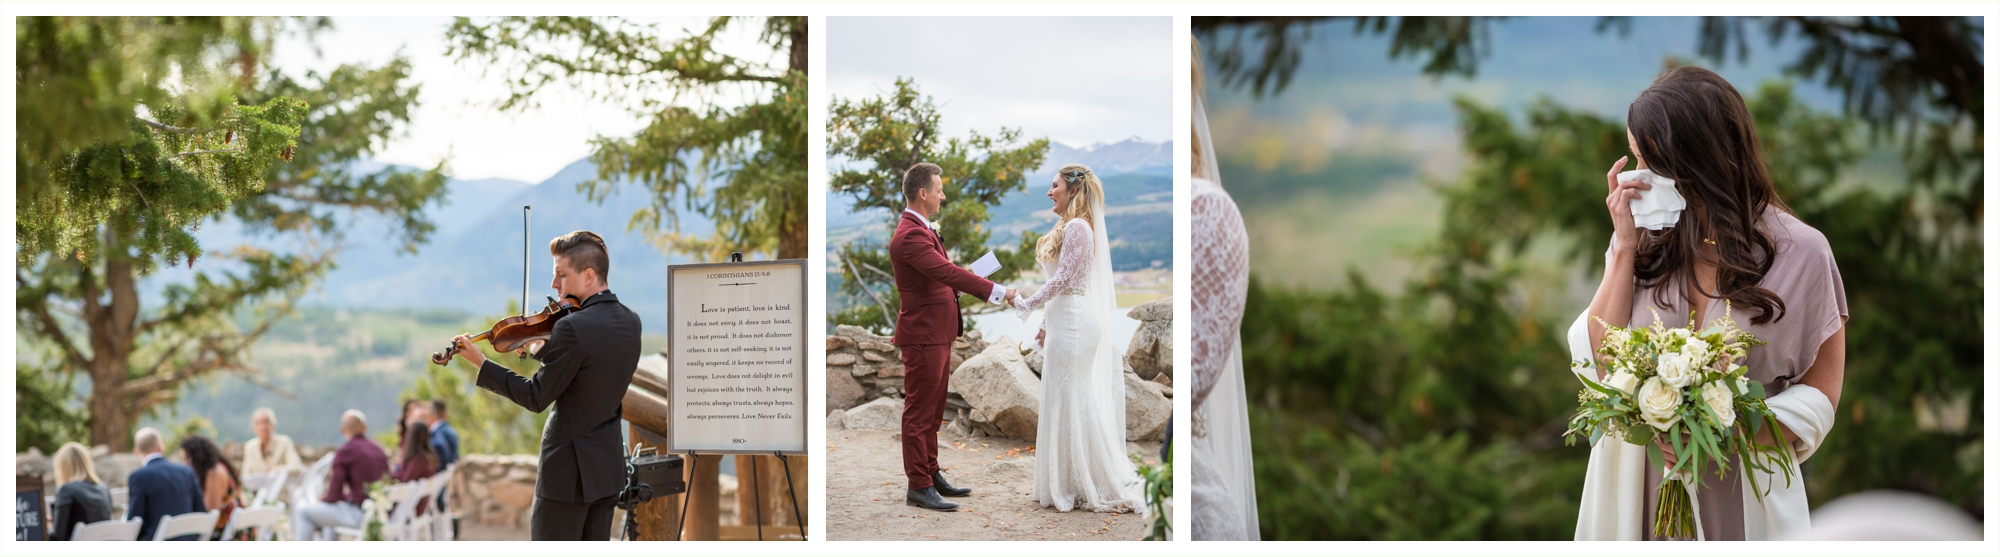 wedding ceremony in september at sapphire point overlook in breckenridge colorado wedding photographer